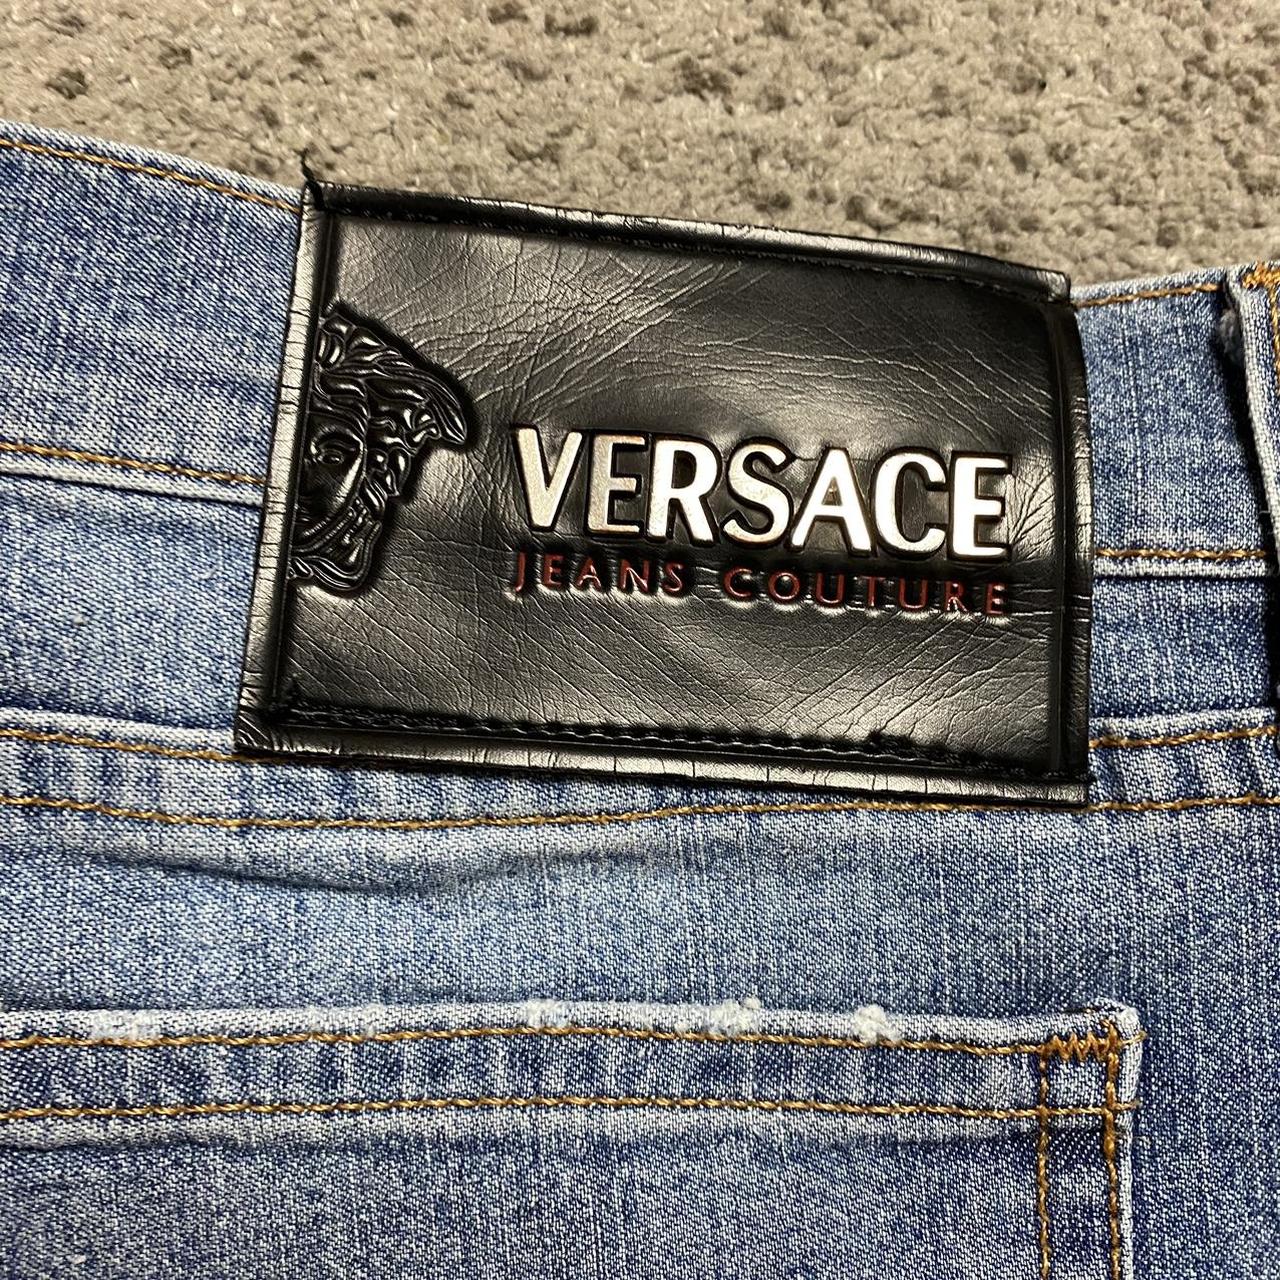 Versace Jeans Couture Men's Blue and Black Jeans | Depop